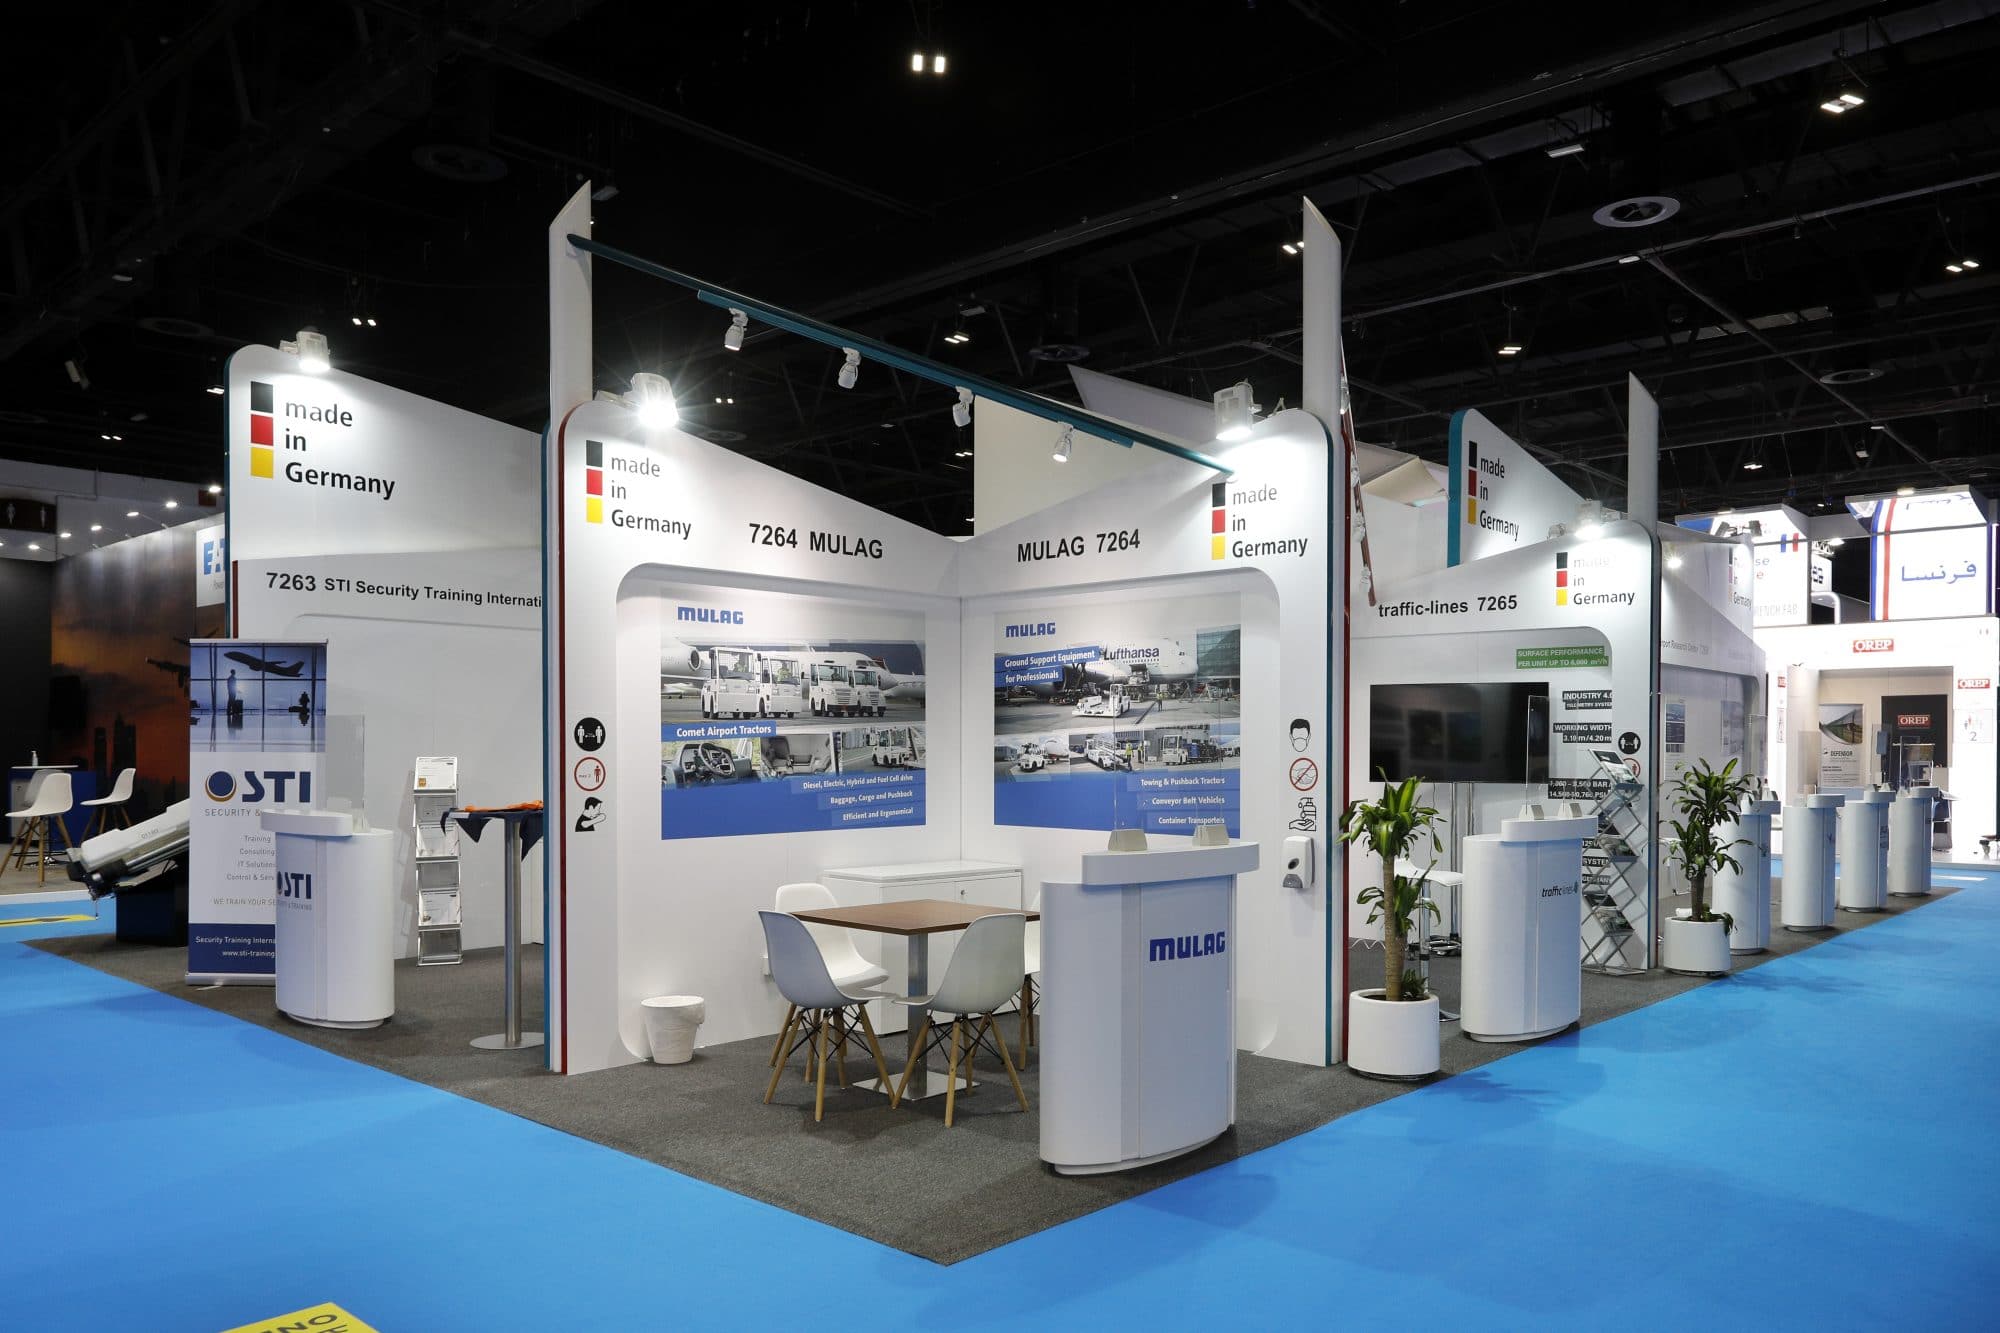 Germany Pavilion @ Airport Show Dubai 2021